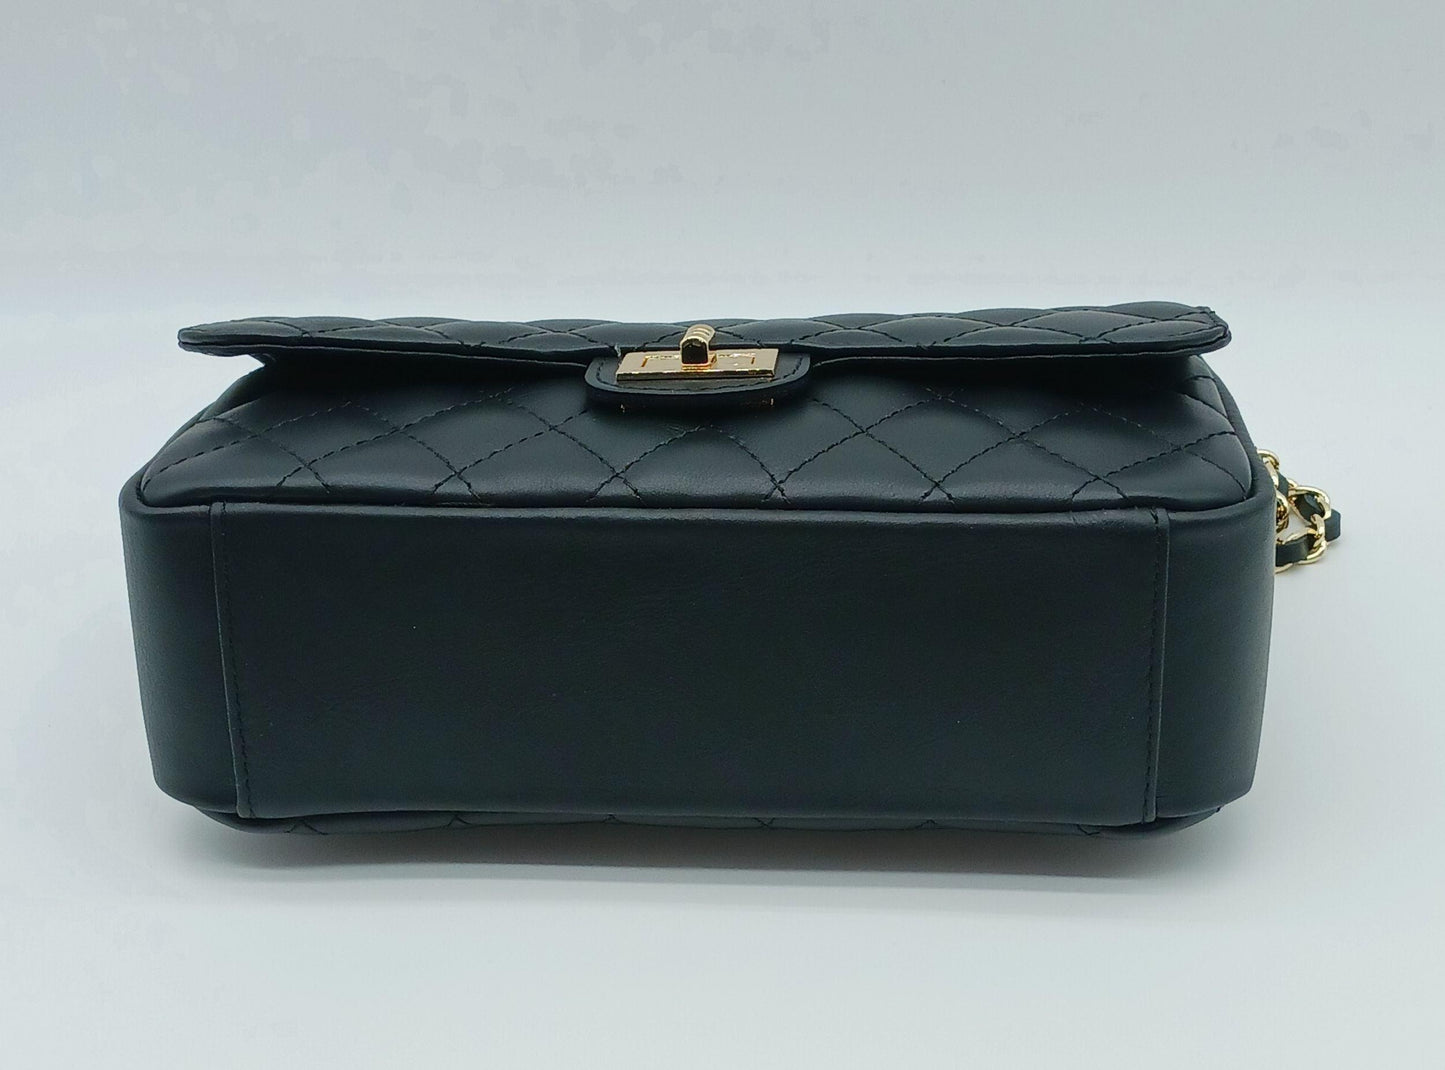 Genuine Leather Quilted Handbag (Medium) Black – Made In Italy - DumasvilleBoutique